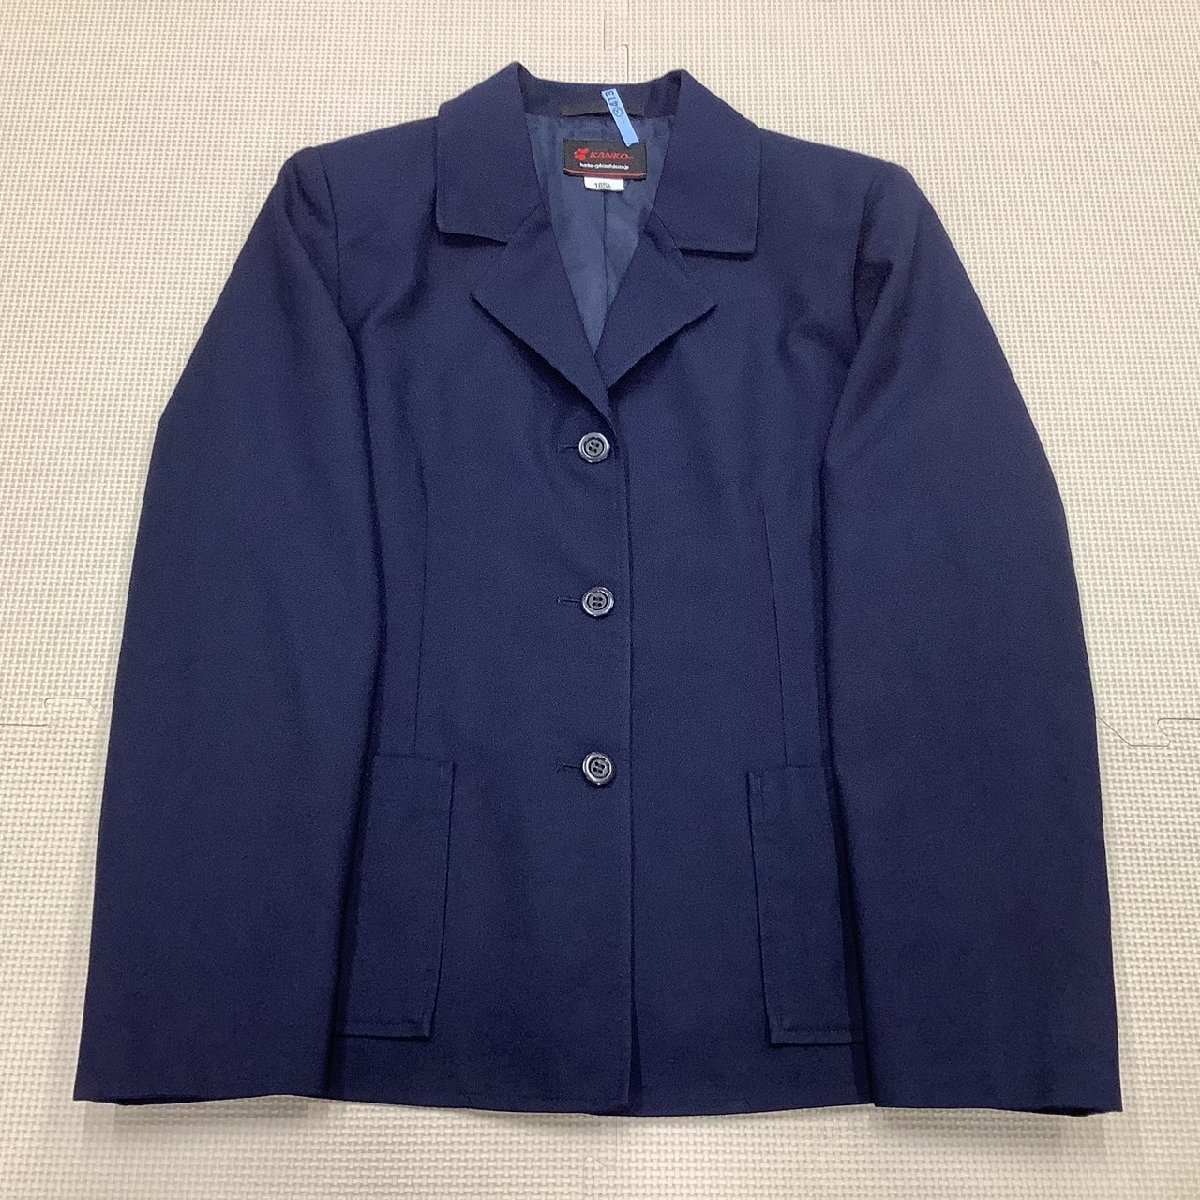 I465/Y( б/у ) Tohoku направление женщина форма 3 пункт /. название неизвестен /165A/MT/W63/ блейзер / зима юбка / длинный рукав блуза / зима одежда / зимний / темно-синий /KANKO/ женщина студент / школьная форма 